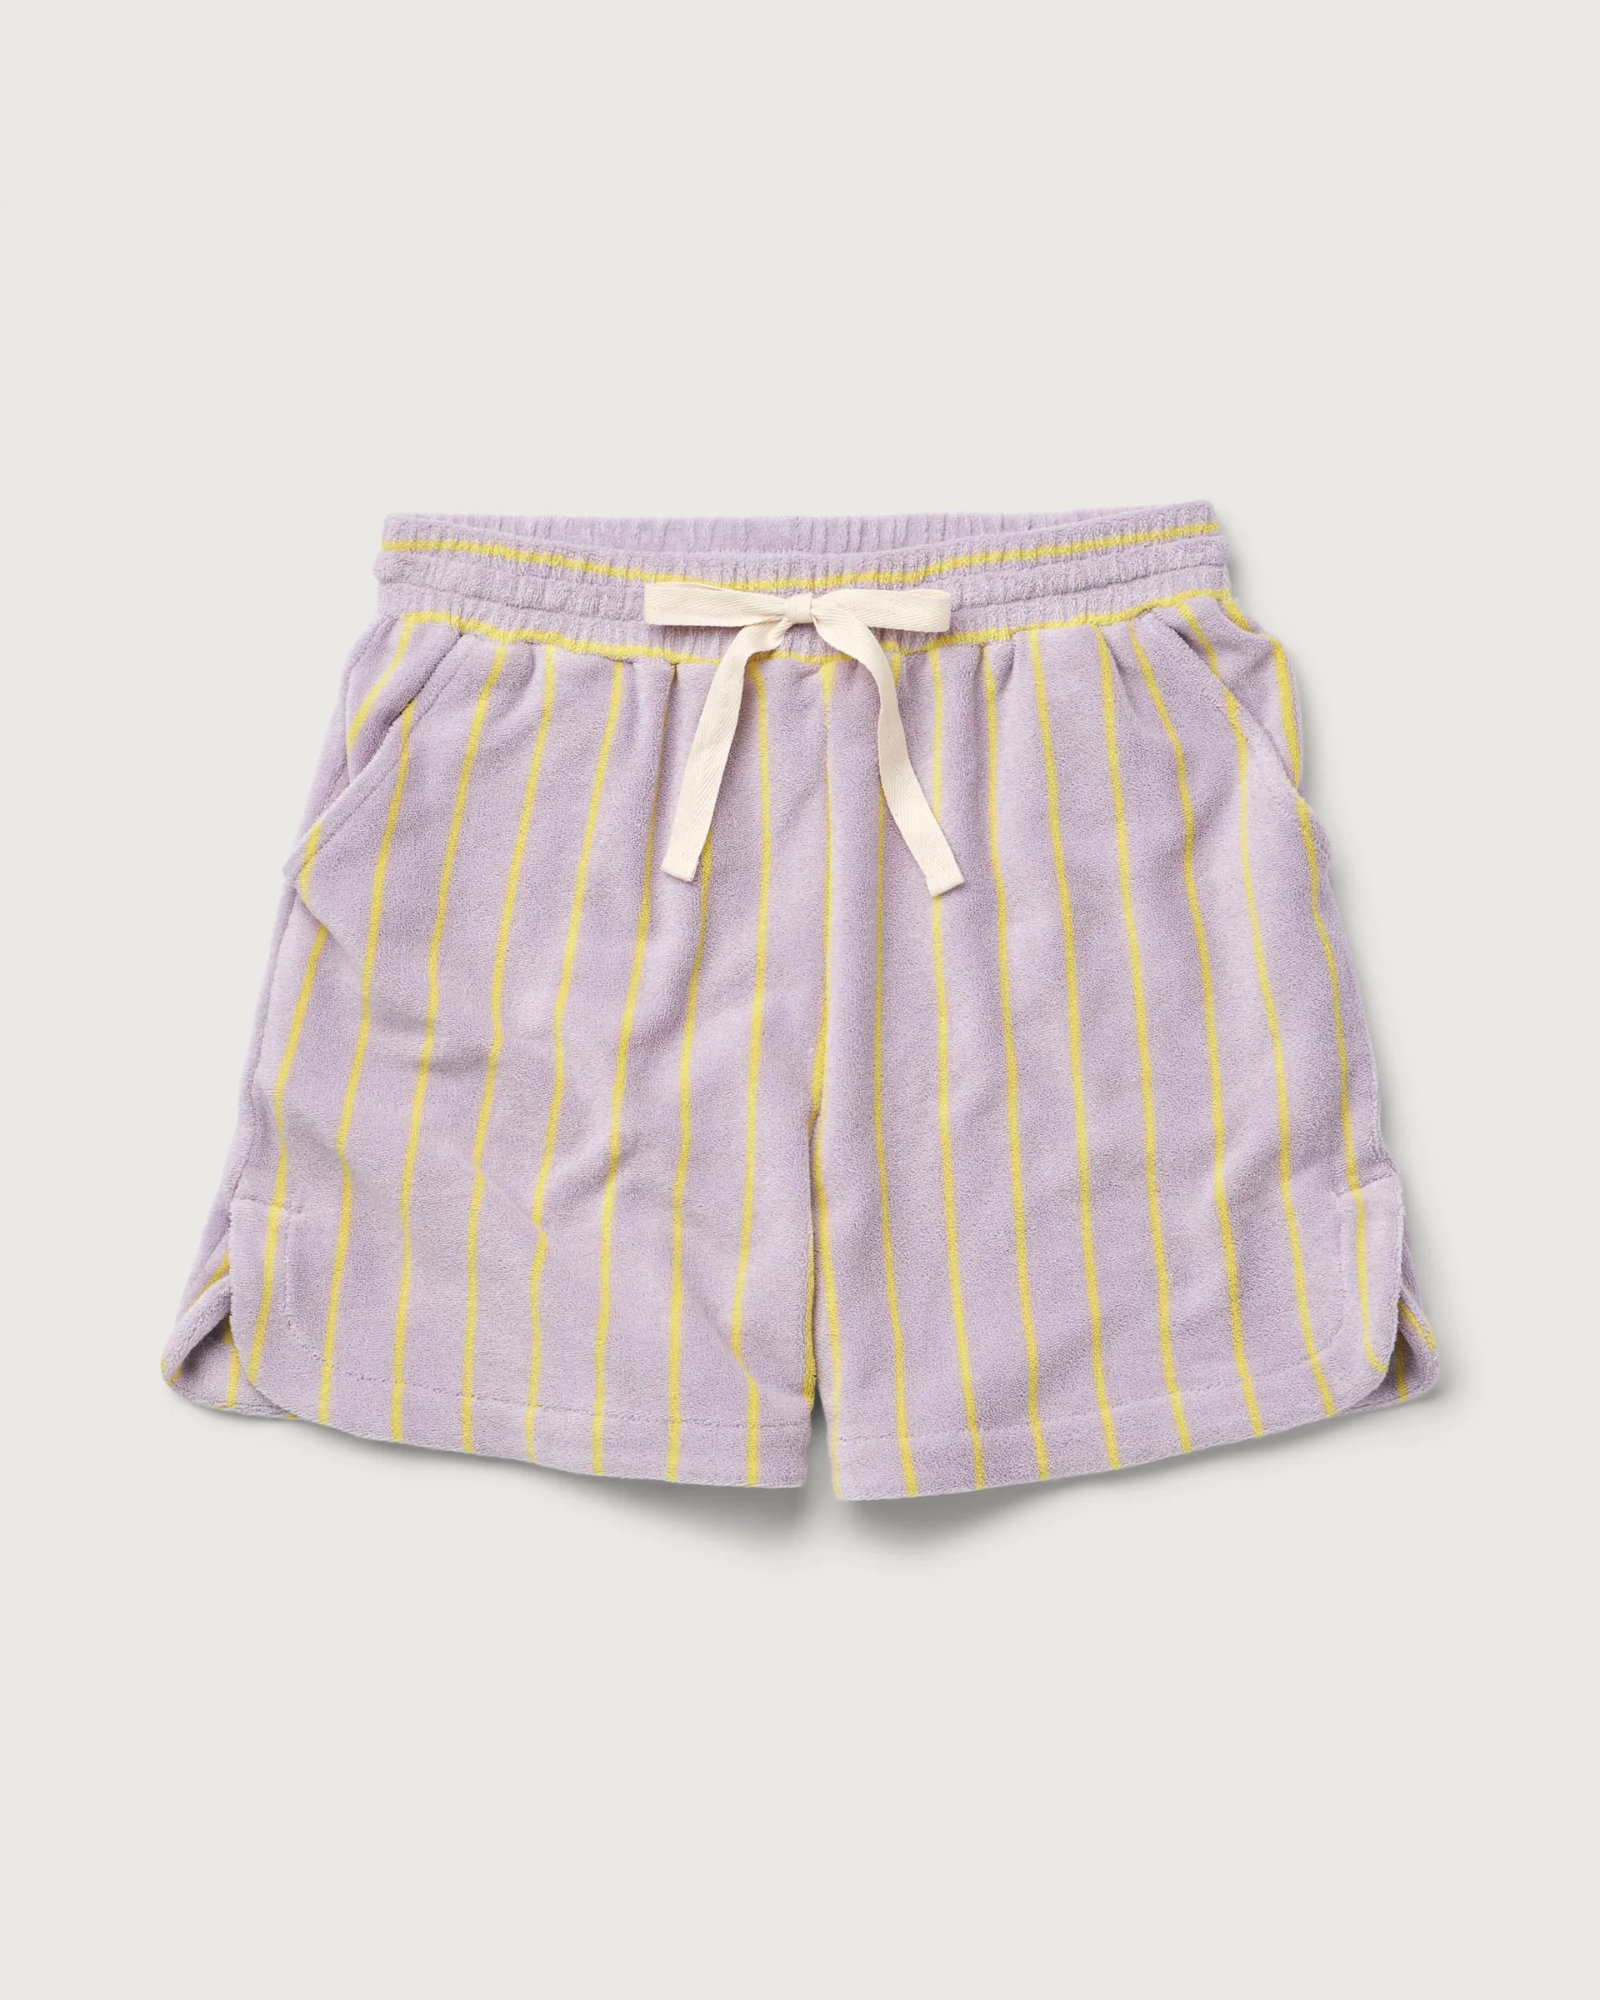 Bongusta - Shorts NARAM Lilac & neon yellow - size 0 (SM) - Lilac & neon yellow